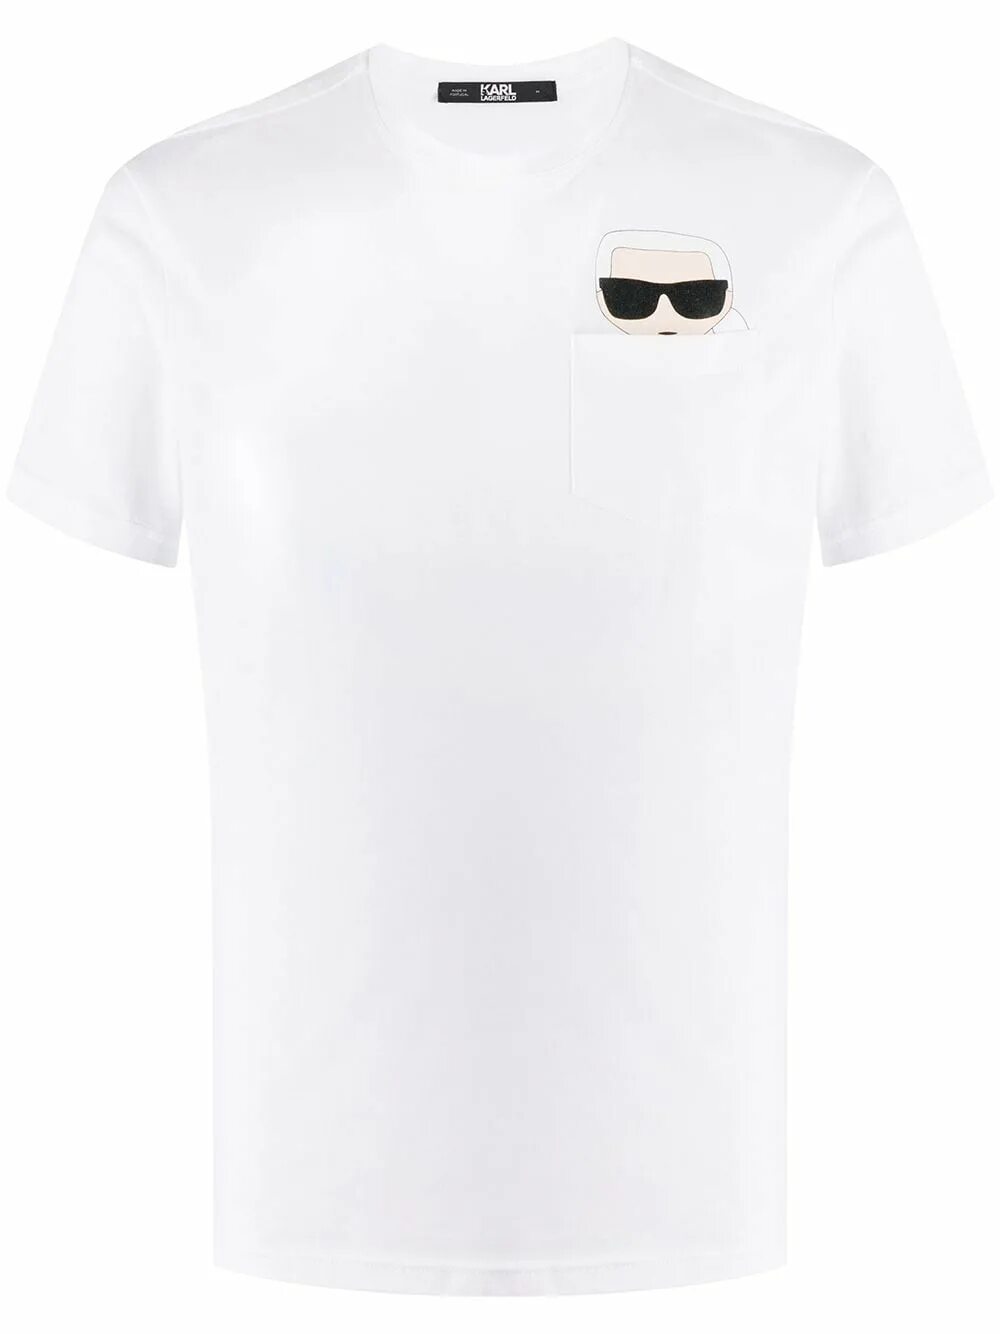 Karl Lagerfeld футболка мужская белая. Футболки лагерфельд купить